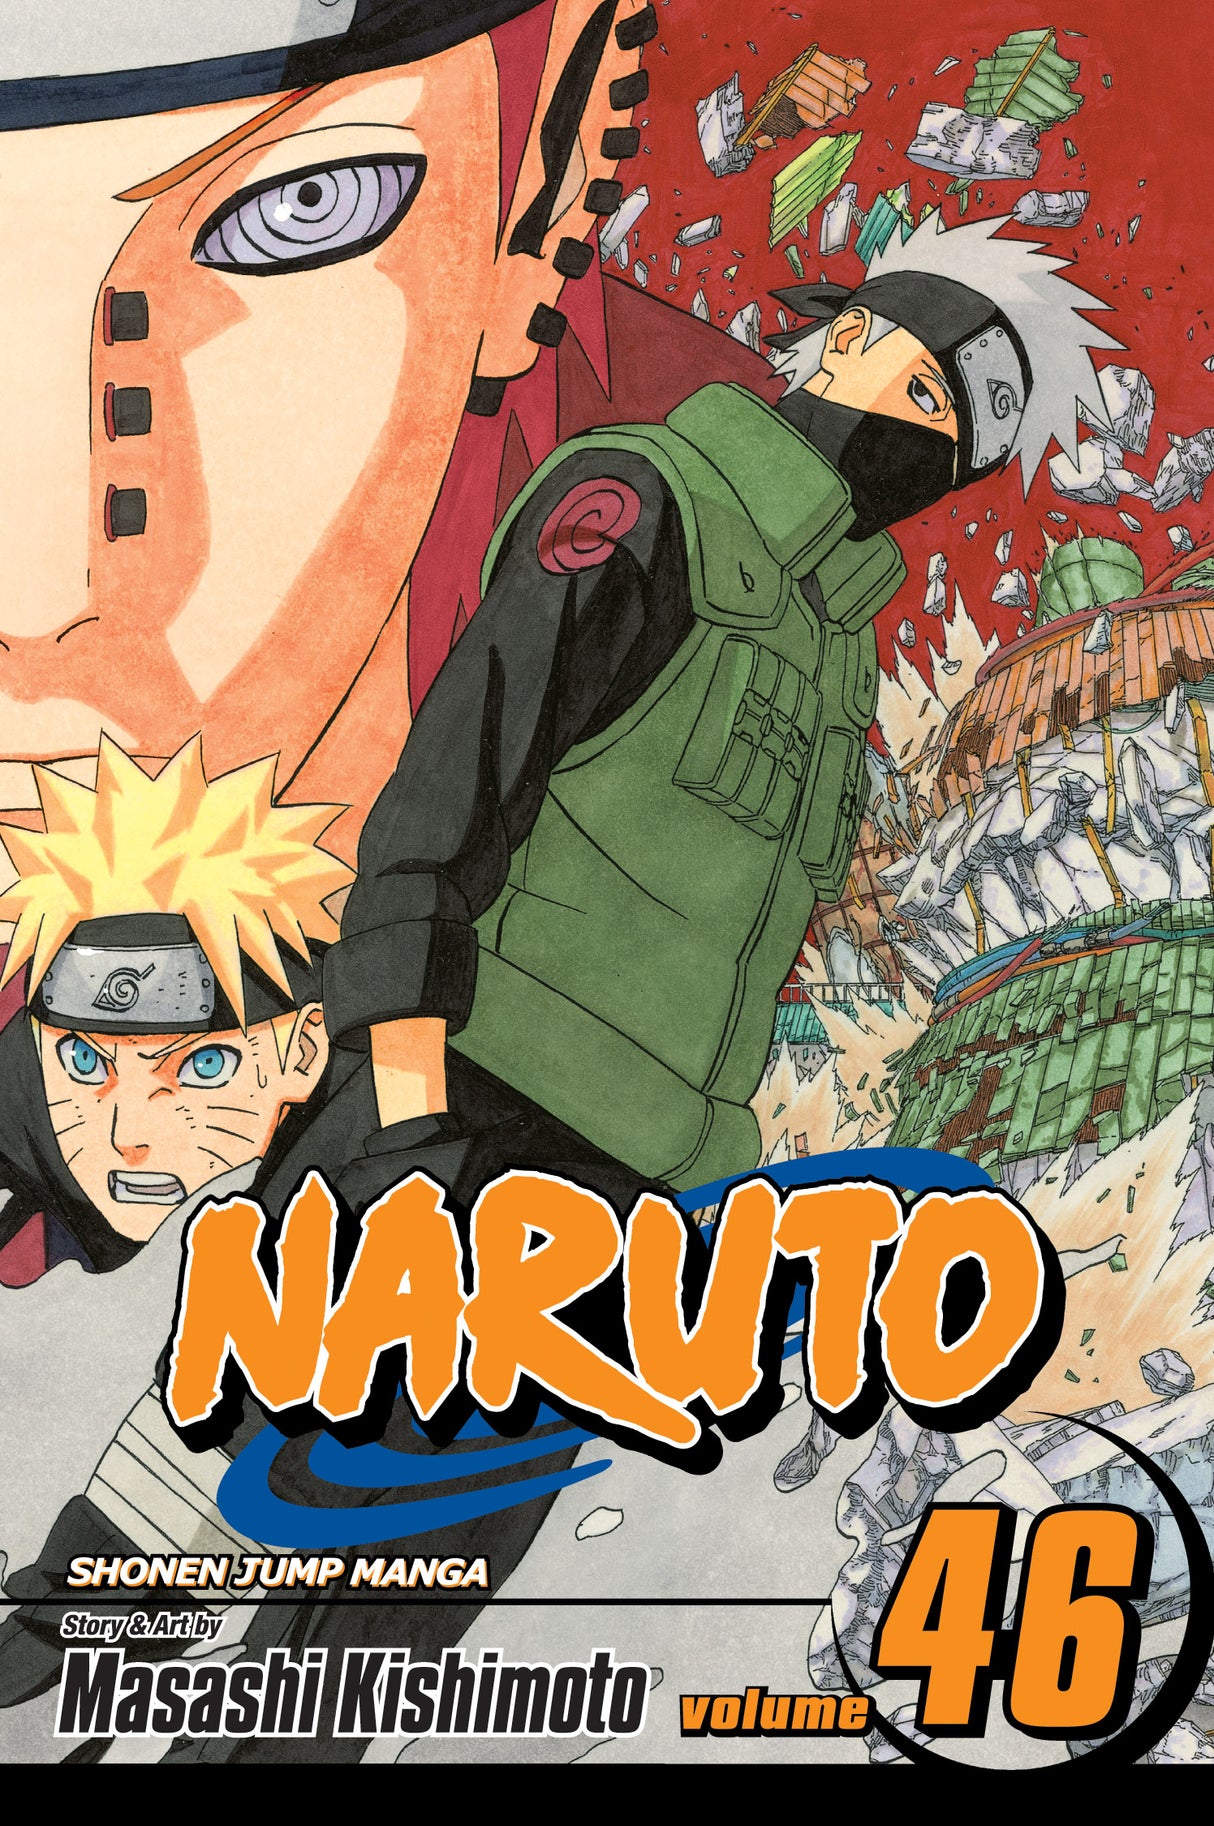 Cover image of the Manga Naruto, Vol.45: Battlefield, Konoha